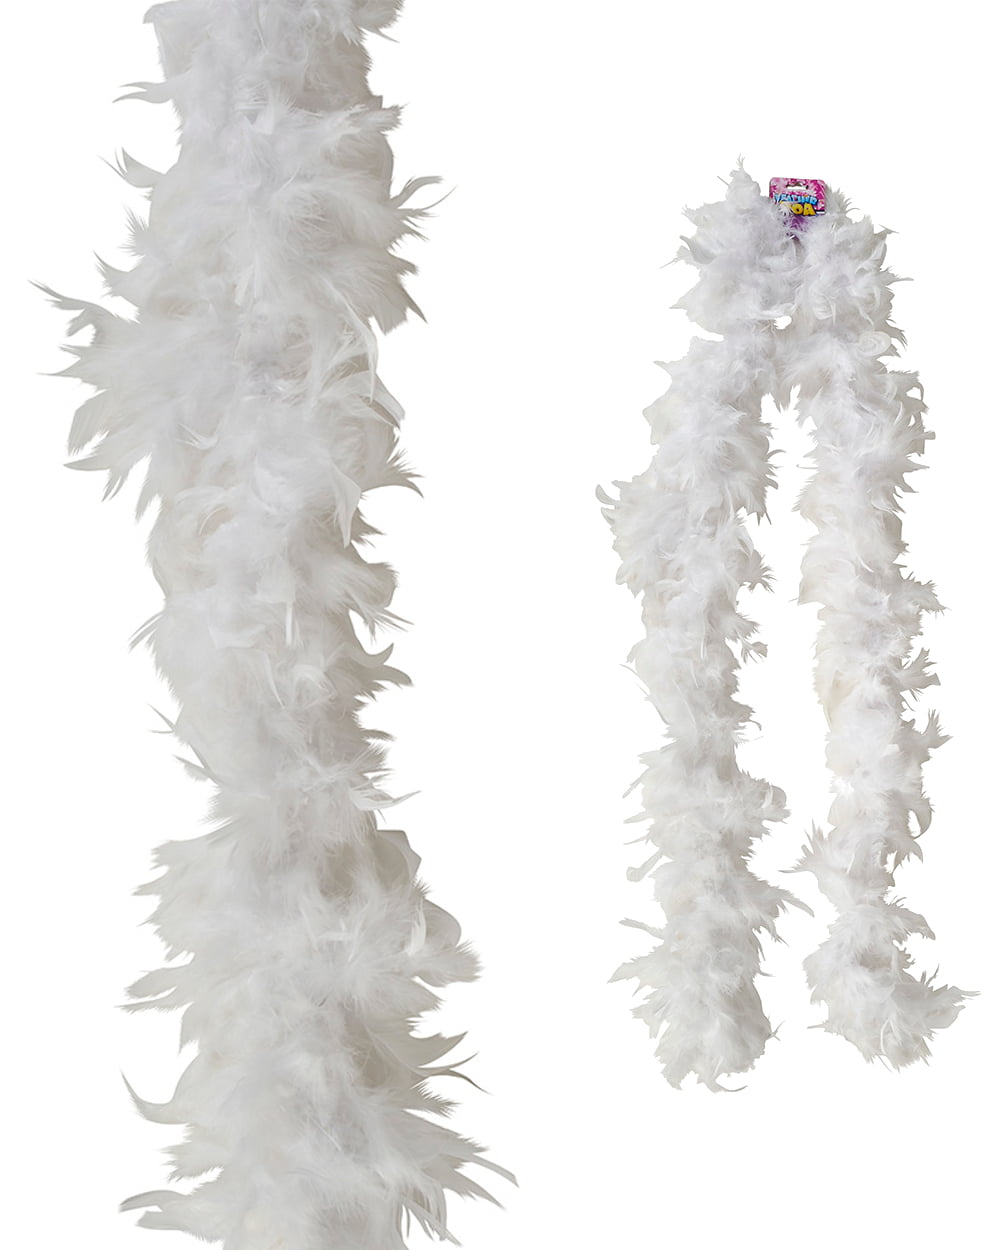 Rhode Island Novelty Dozen Mardi Gras 72 Feather Boas 20s Show Girl Cabaret Costume Accessory 